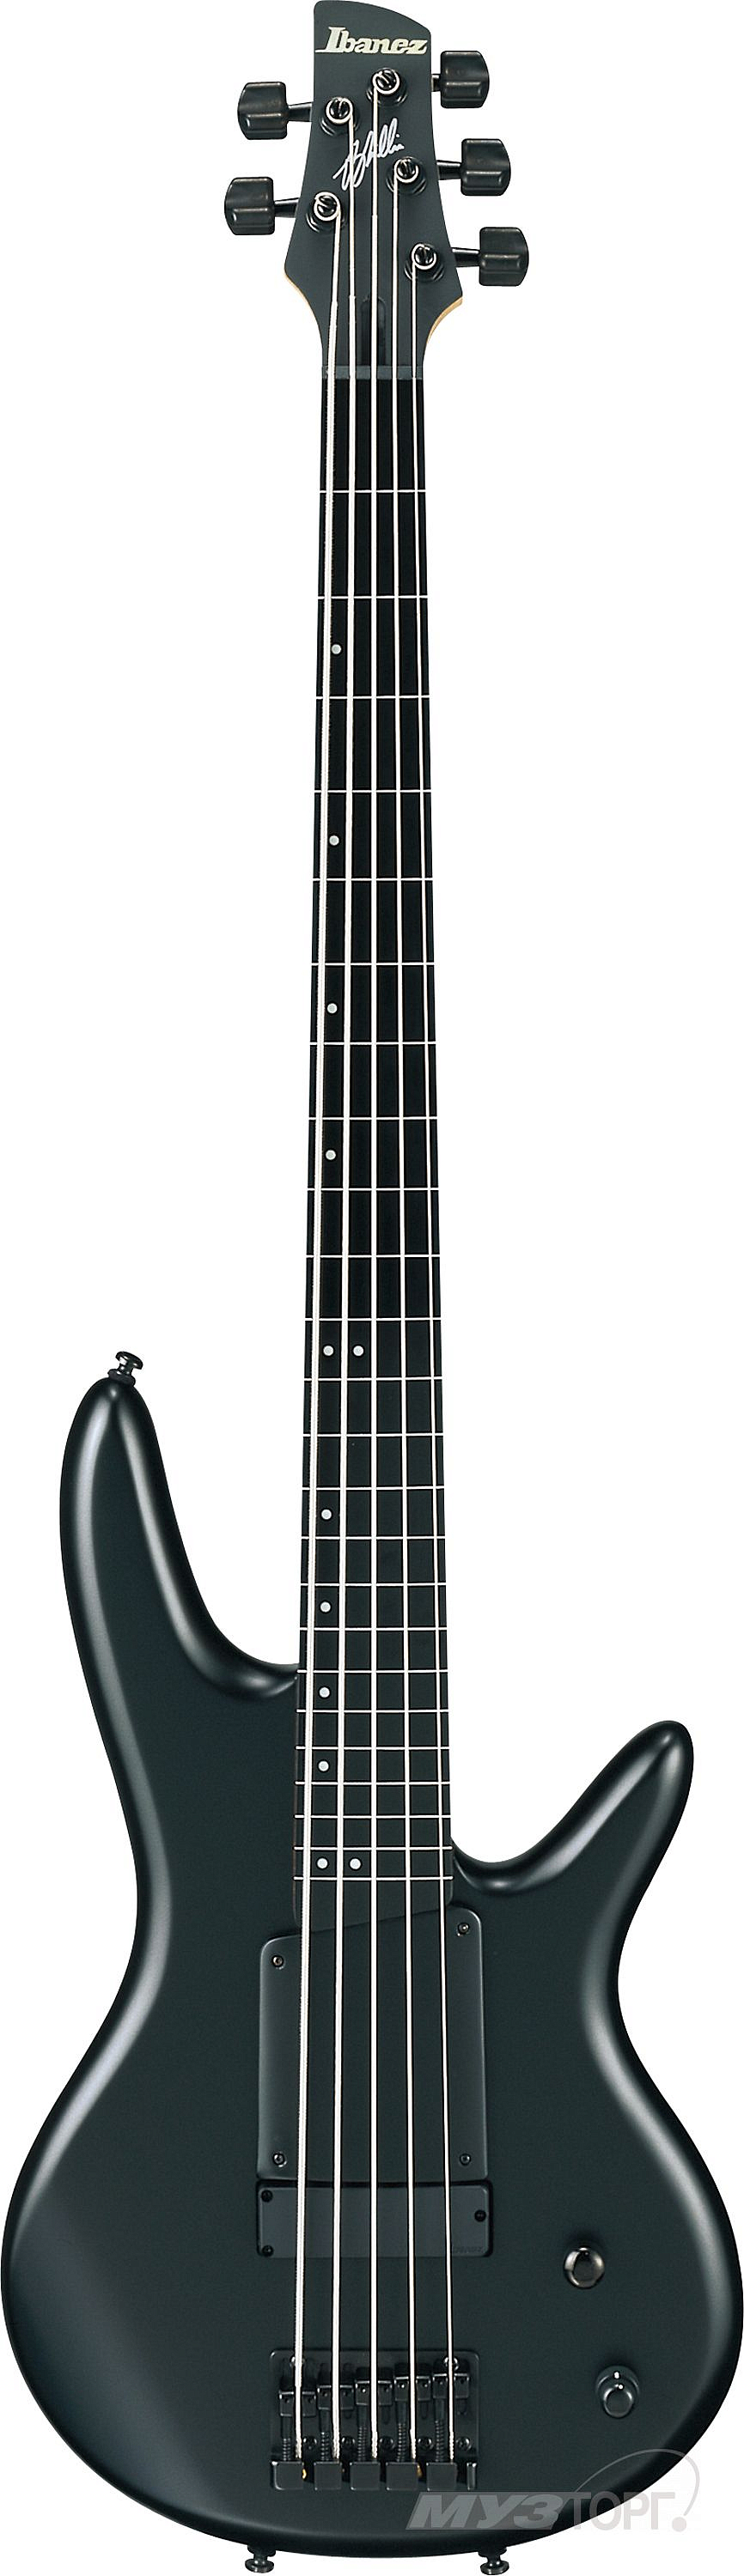 Ibanez GWB35 Black Flat 5-струнная бас-гитара